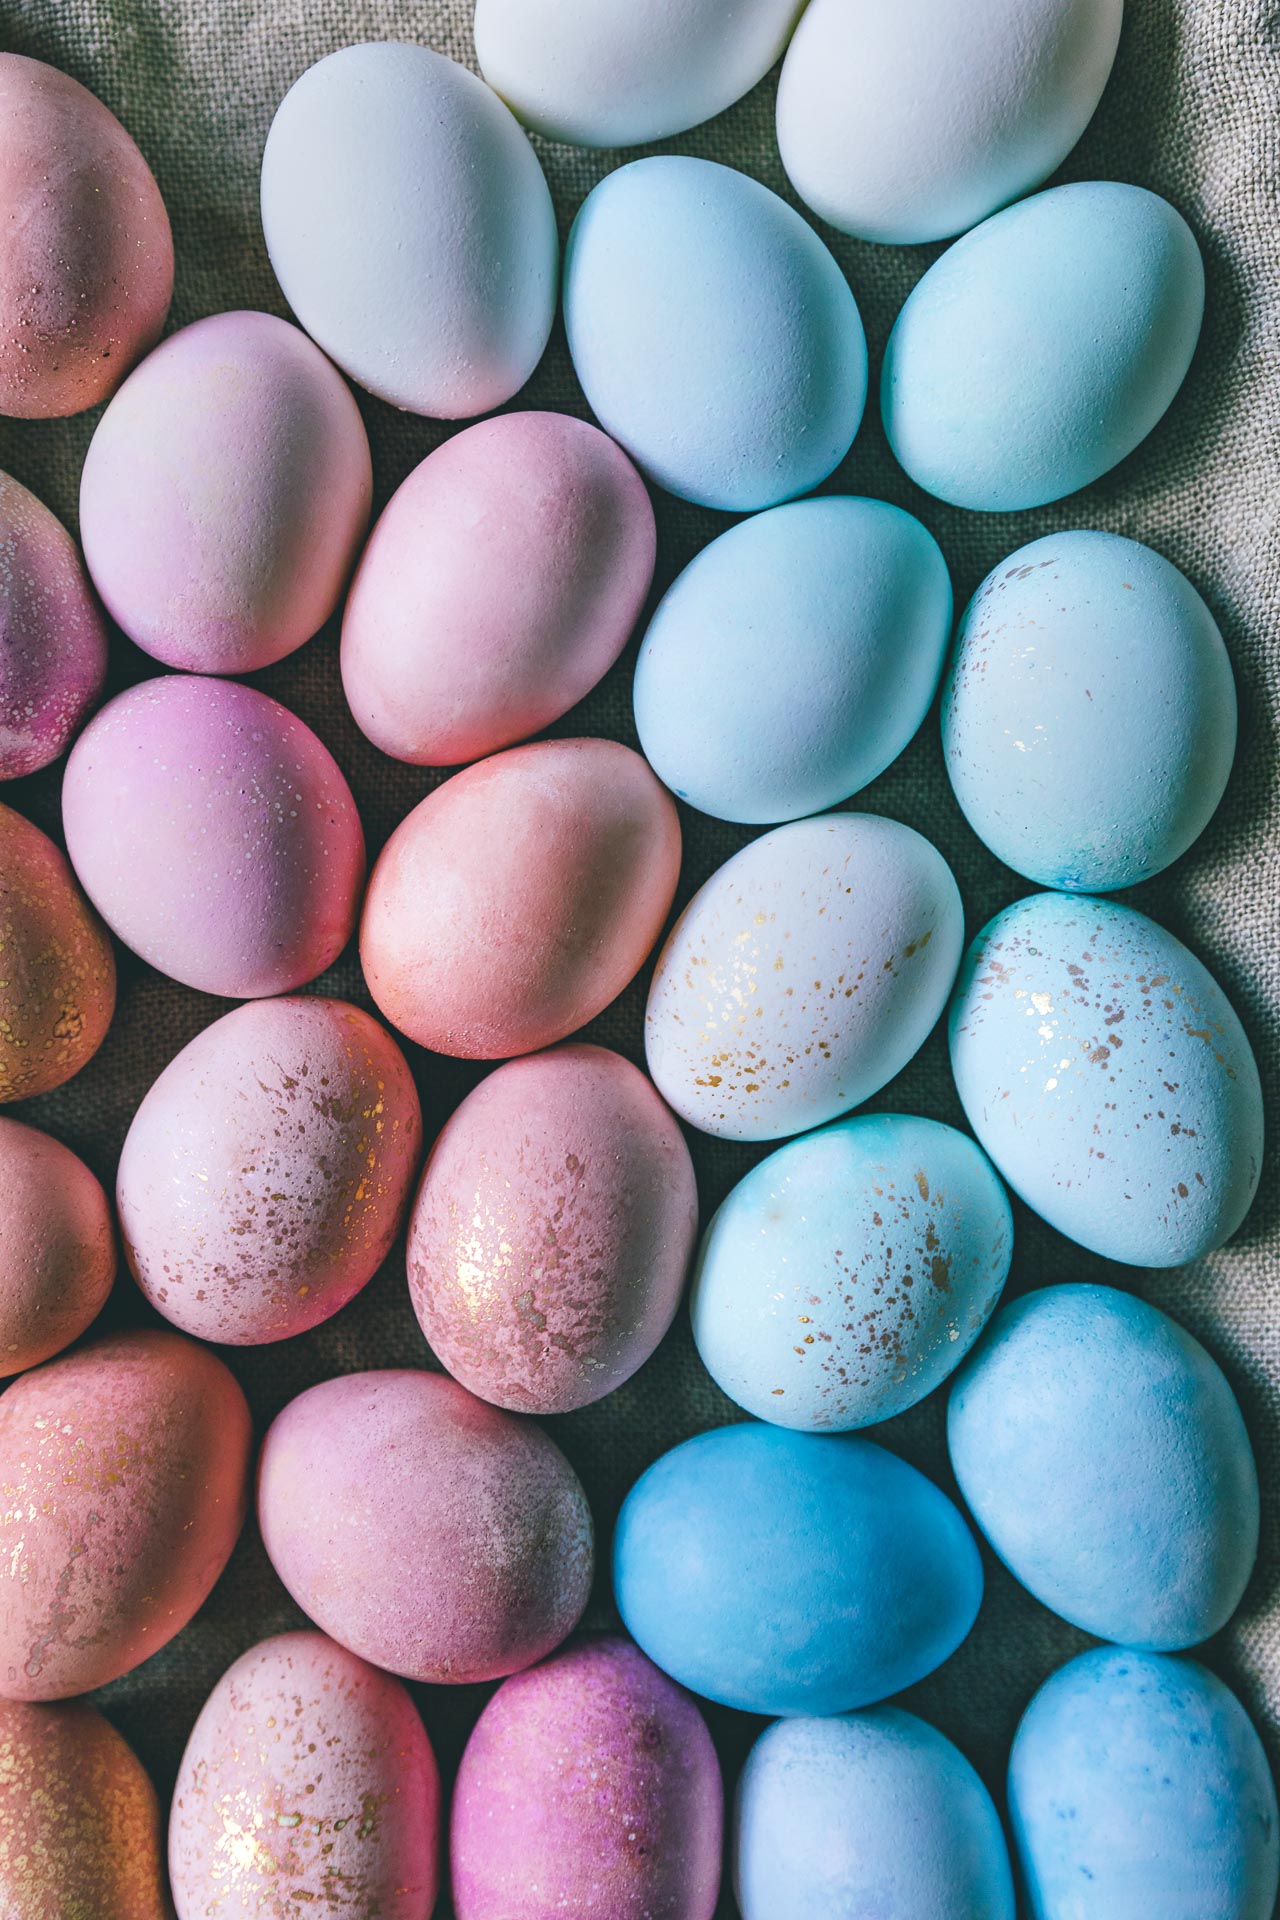 DIY Naturally Dyed Eggs | HonestlyYUM (honestlyyum.com)